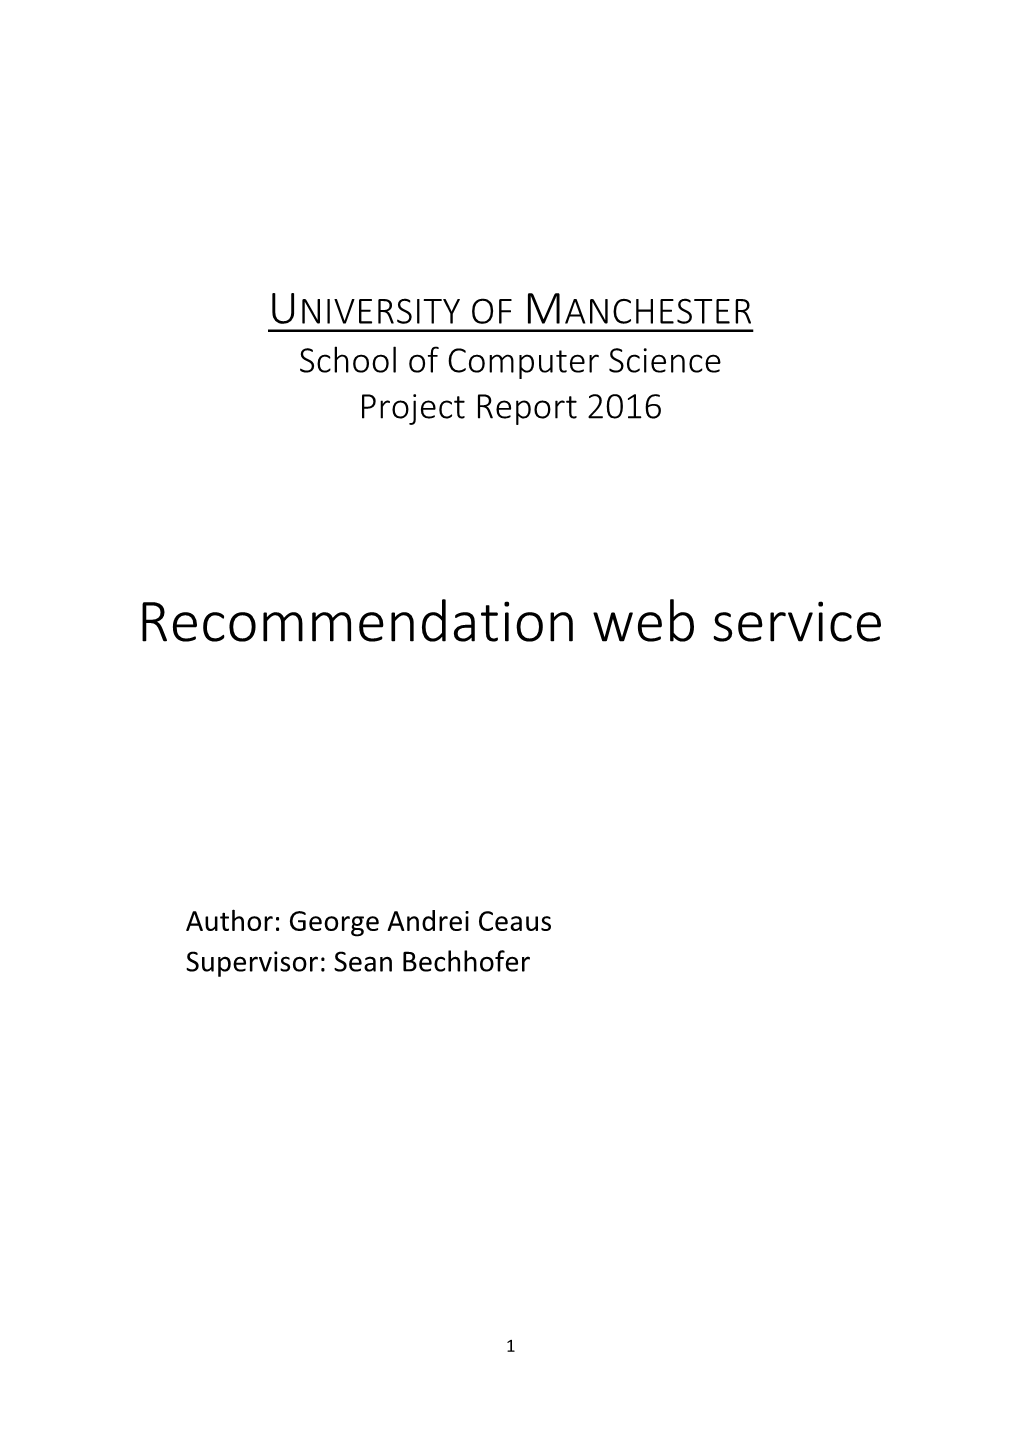 Recommendation Web Service